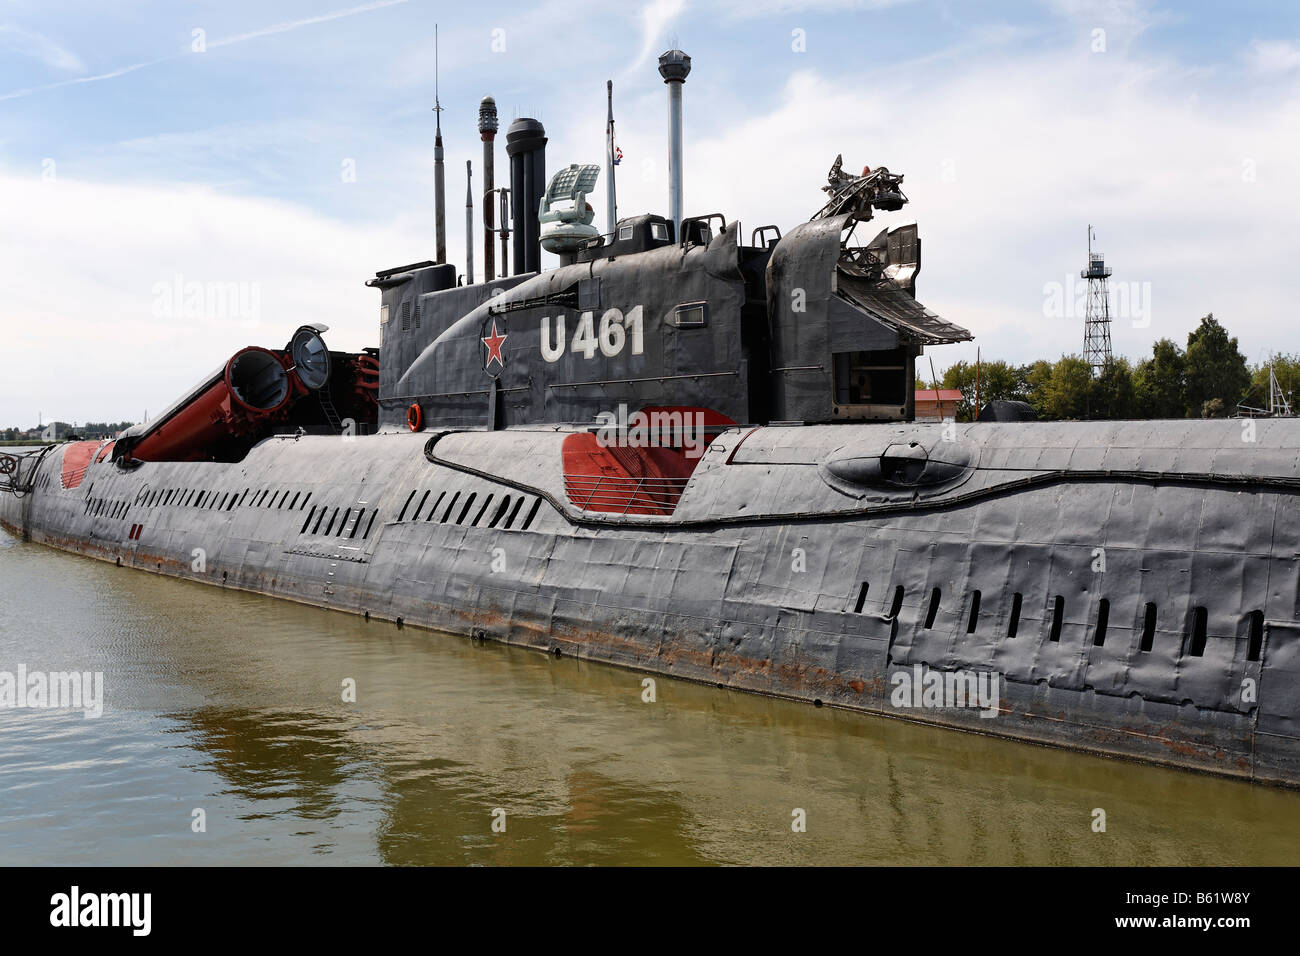 Peenemuende Maritine Museum, decommissioned Russian submarine U461, Usedom Island, Mecklenburg-Western Pomerania, Baltic Sea, G Stock Photo